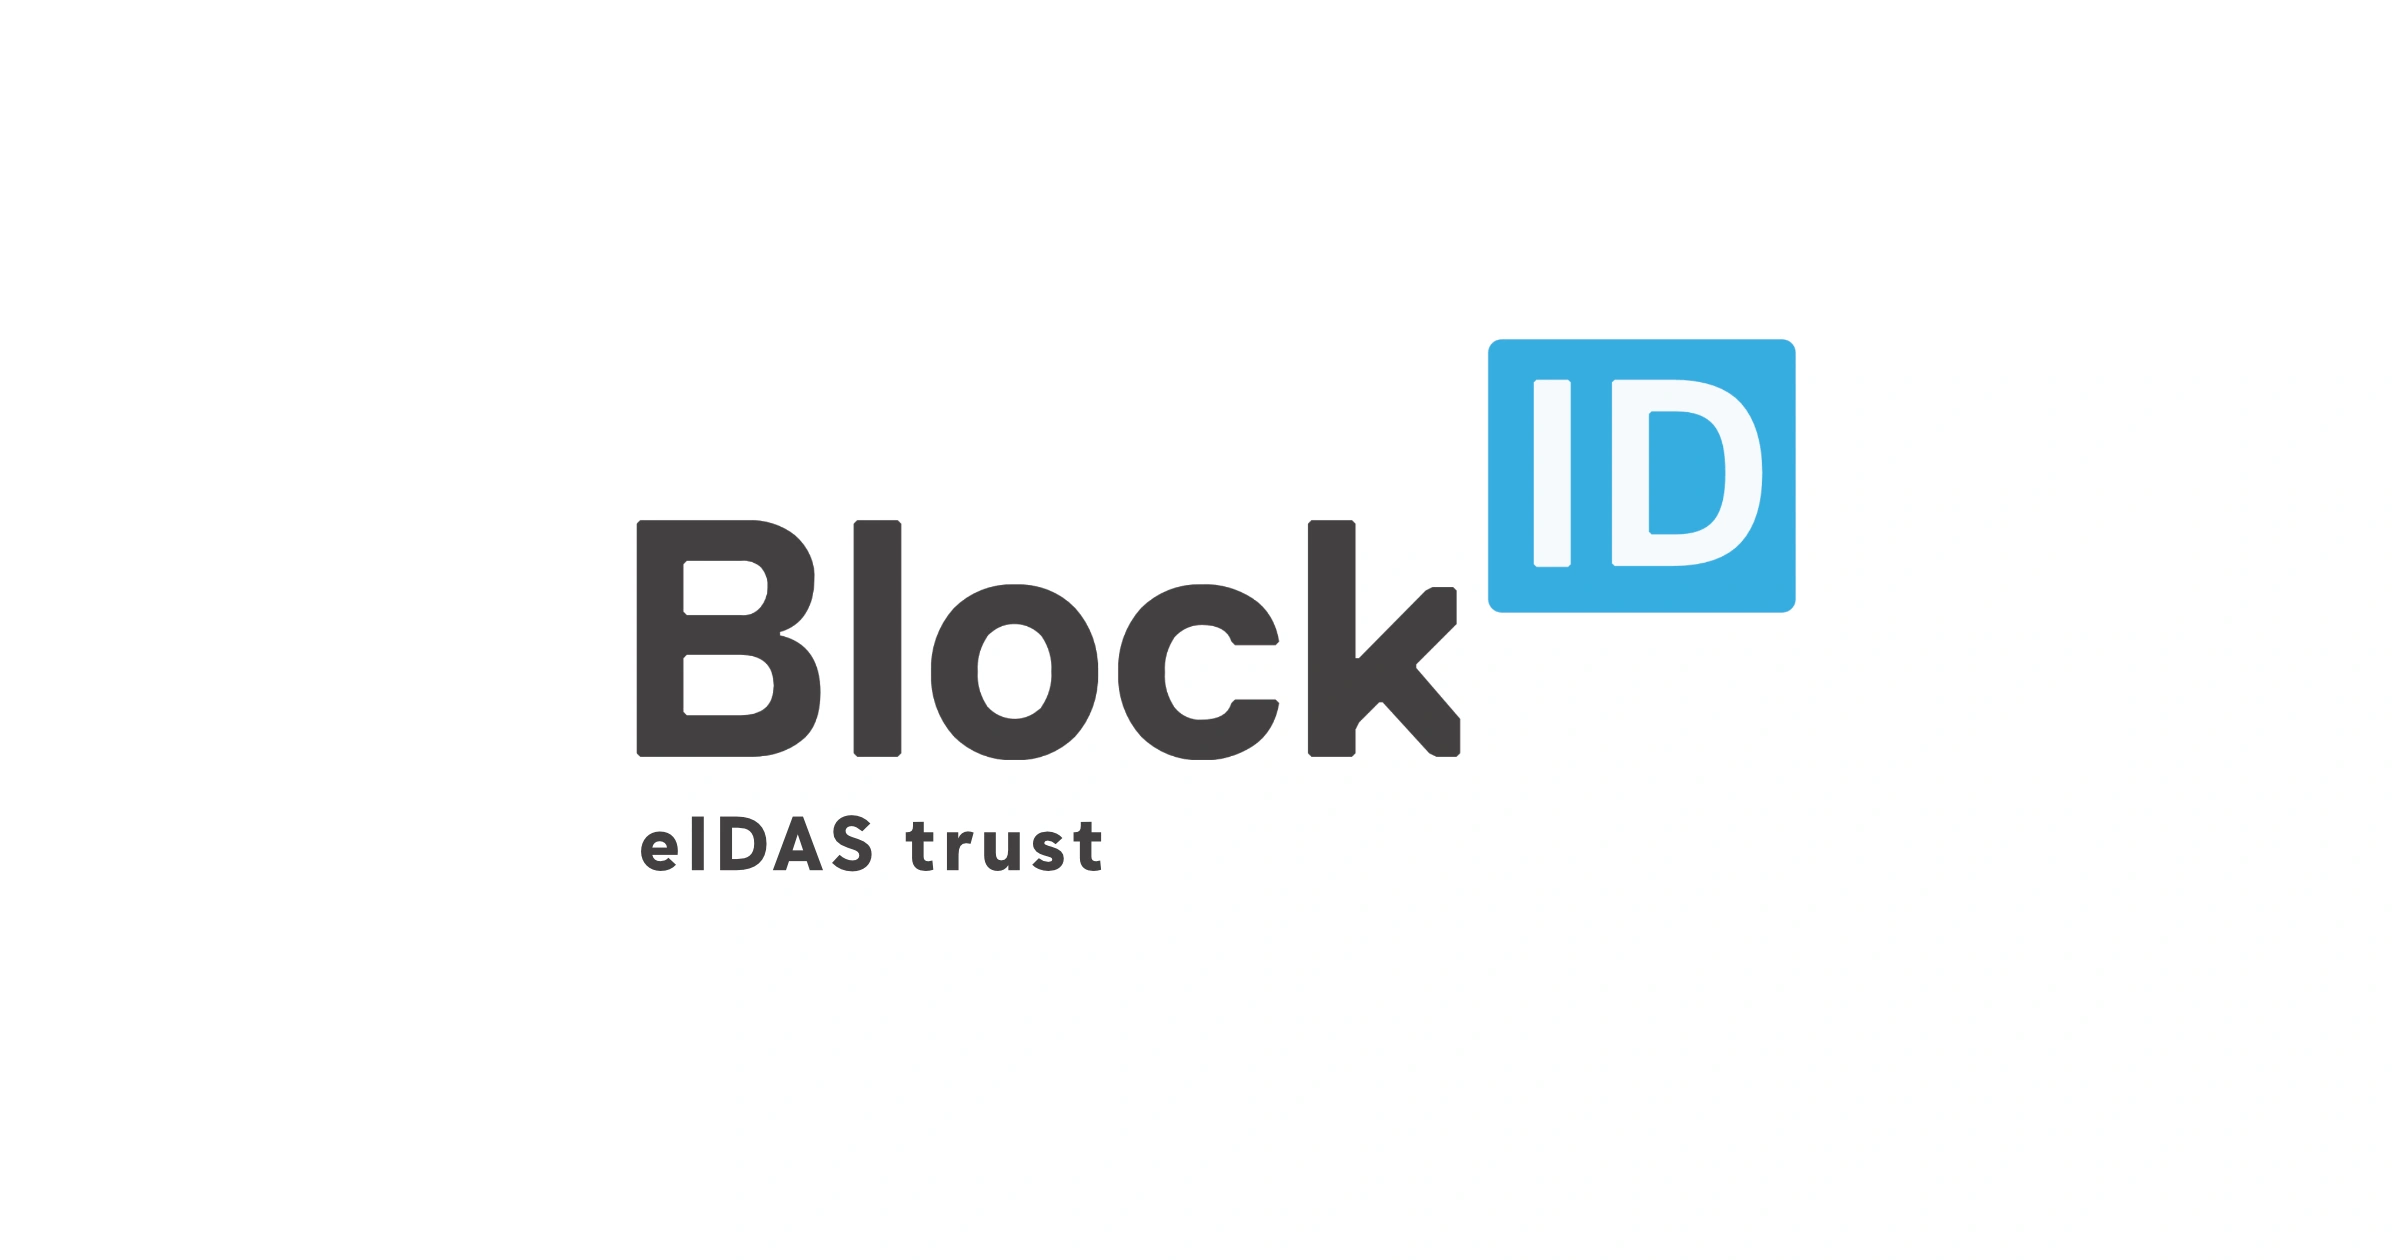 Block ID eIDAS trust